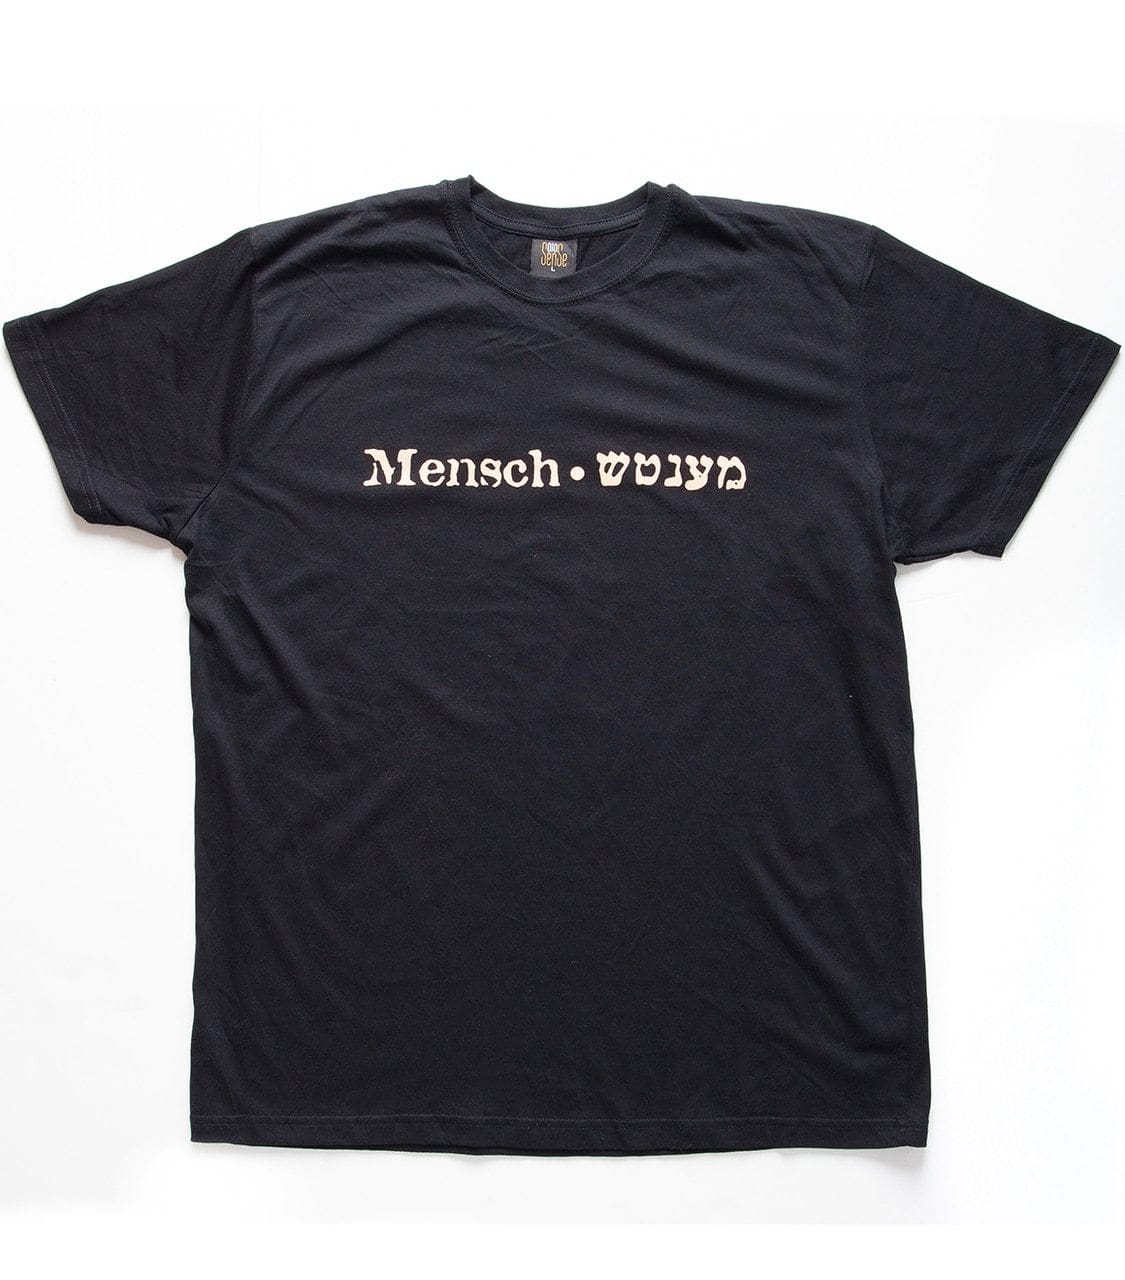 Barbara Shaw T-Shirts Mensch Yiddish T-shirt